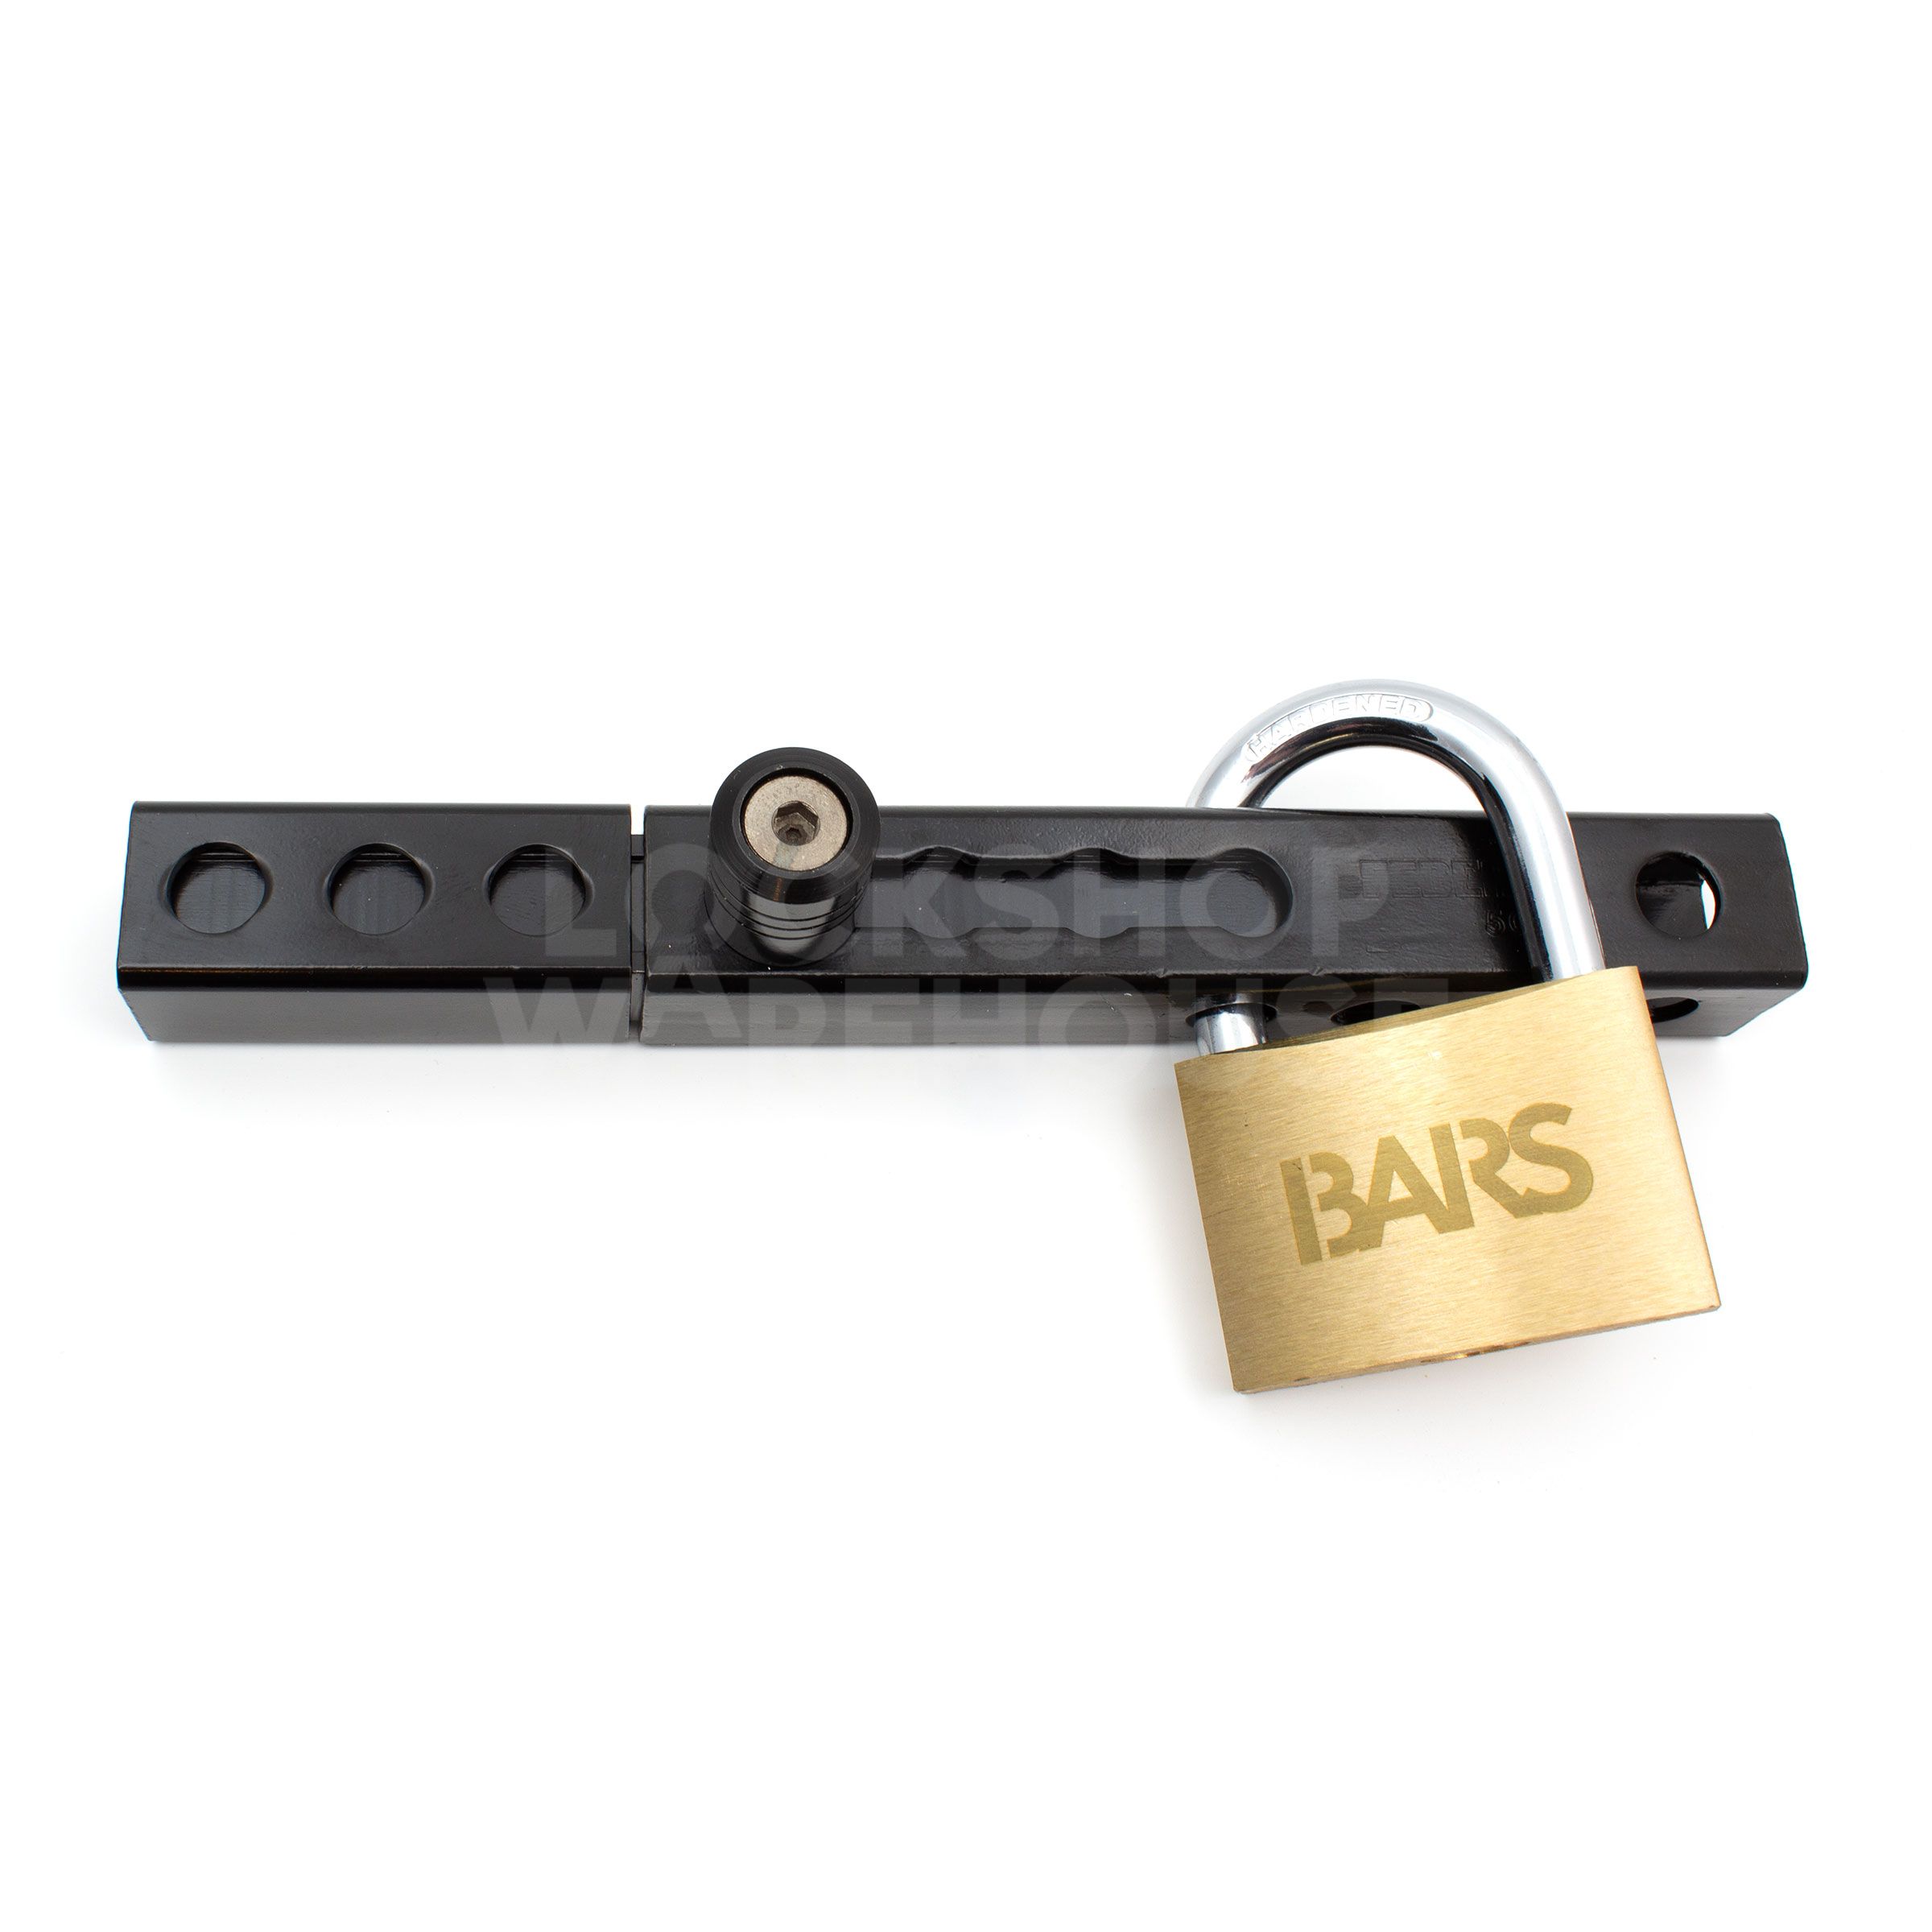 5059 Hardened Locking Bolt and BARS 60mm Brass Padlock